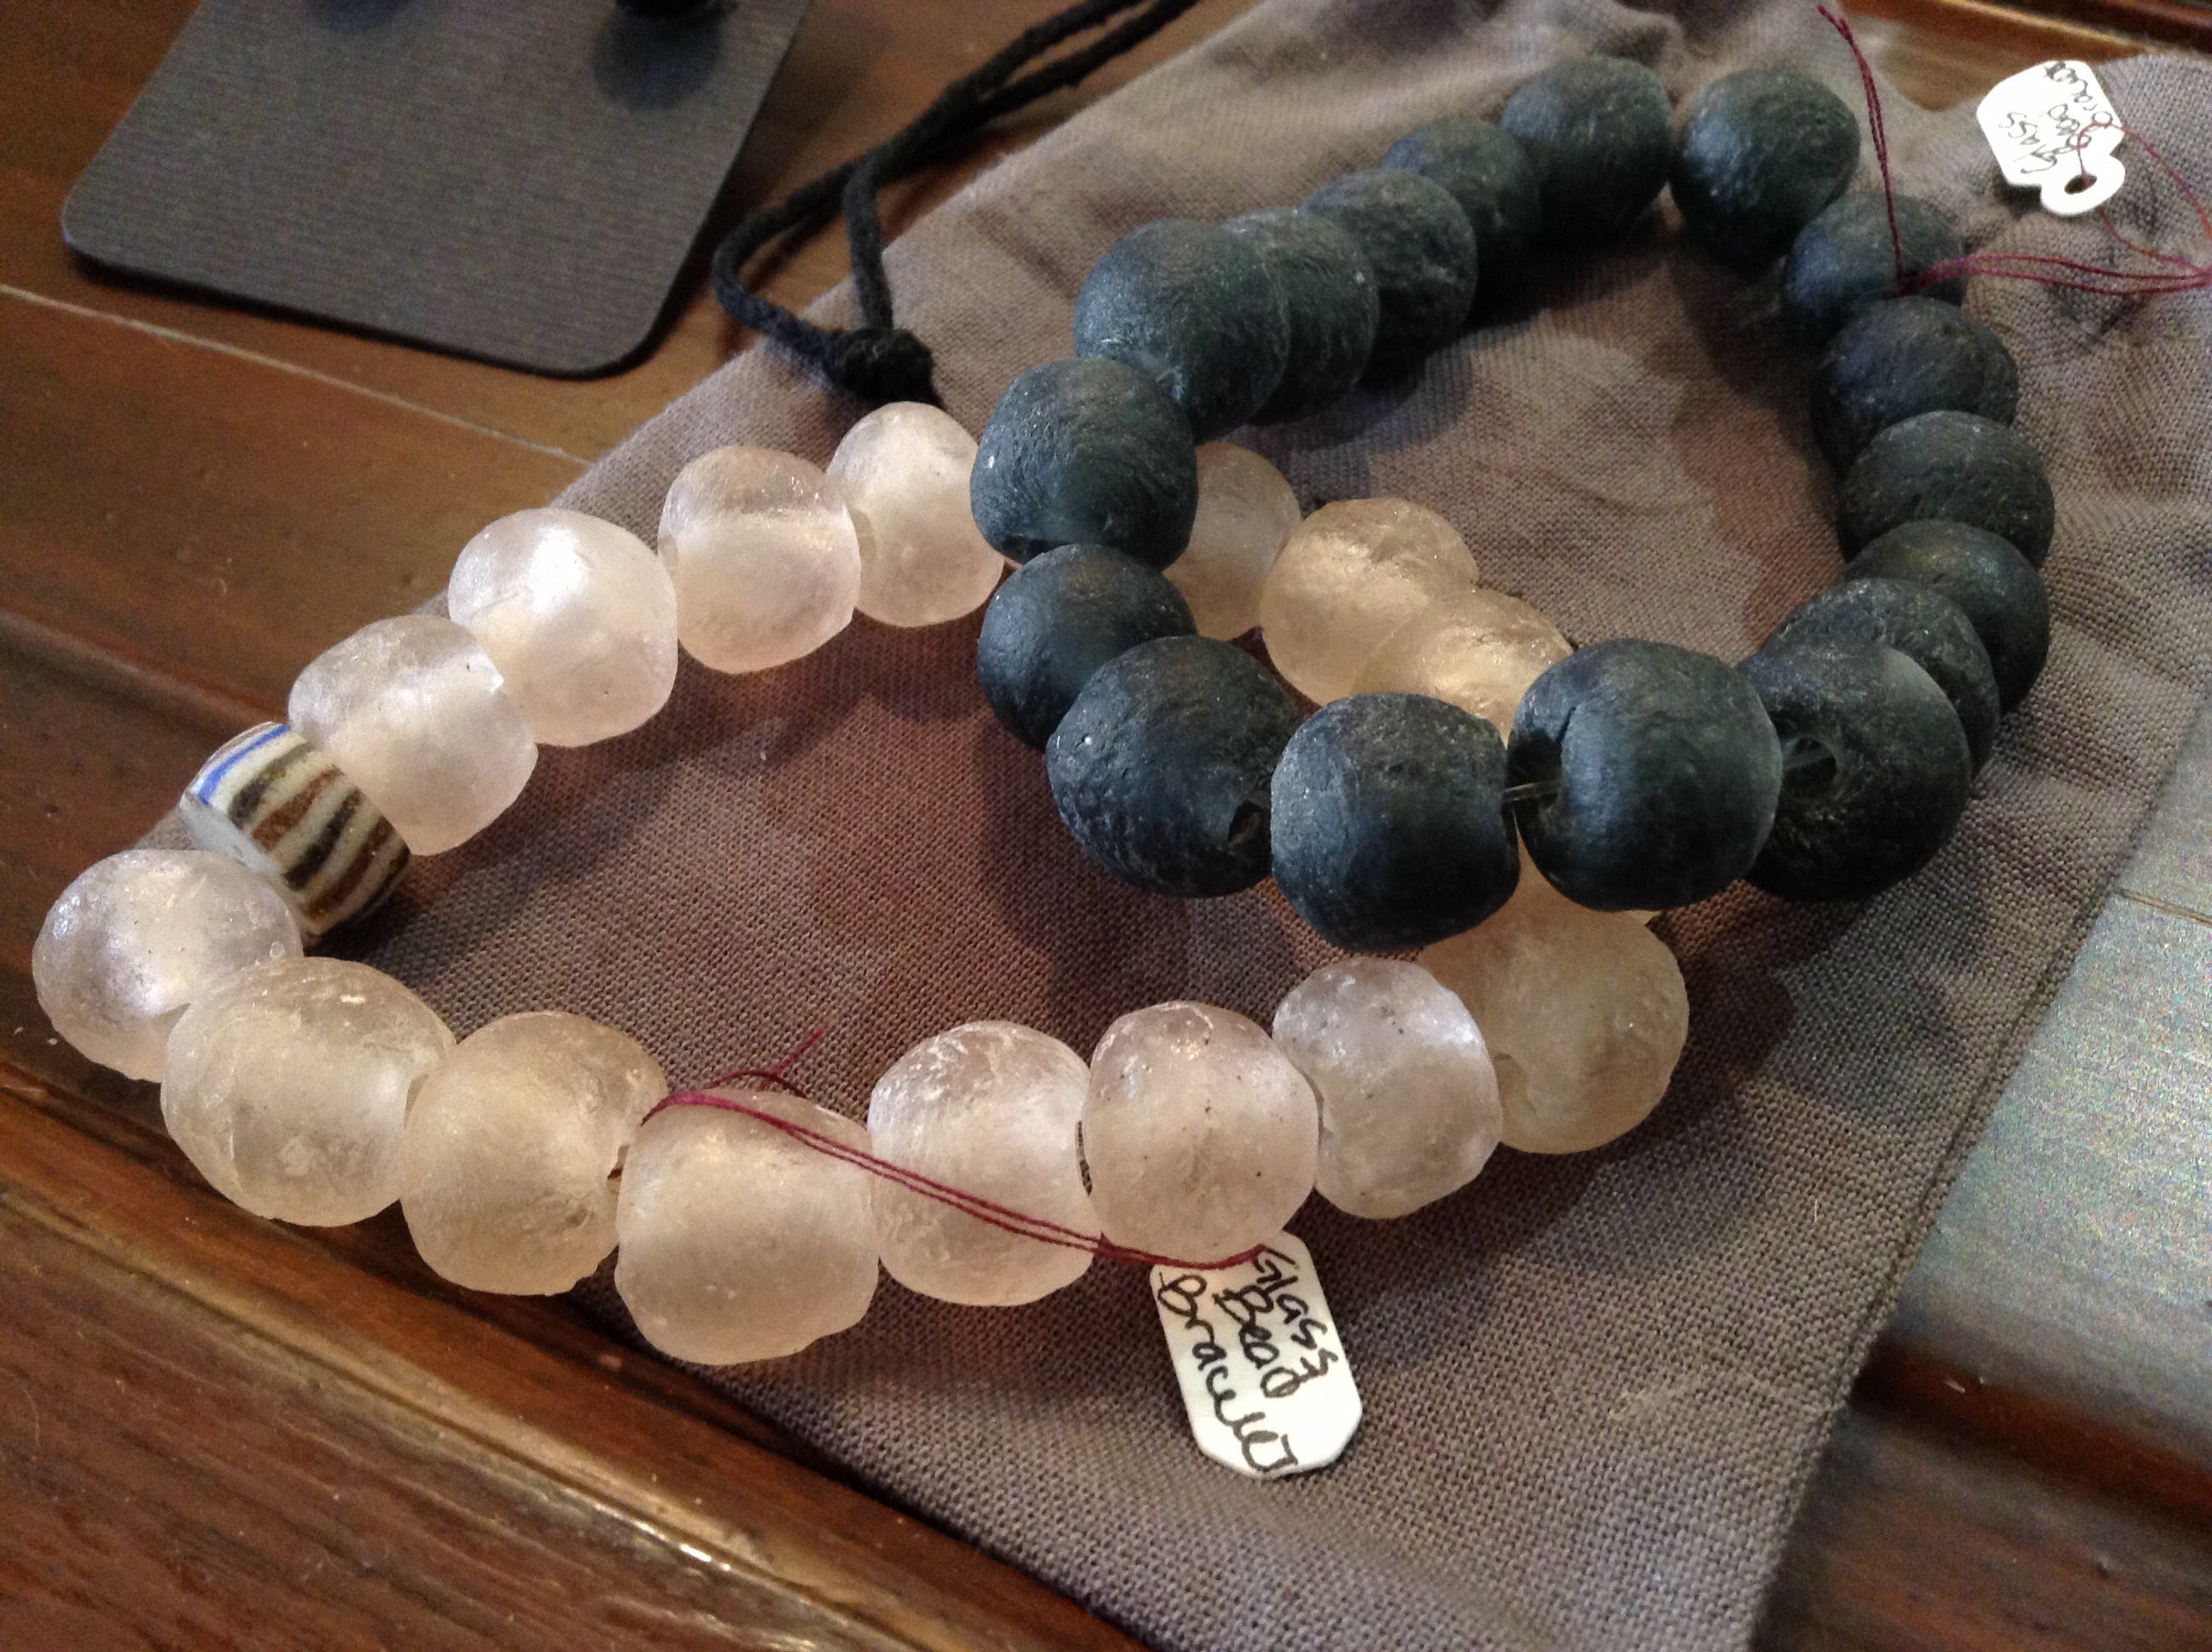 Glass beads bracelet